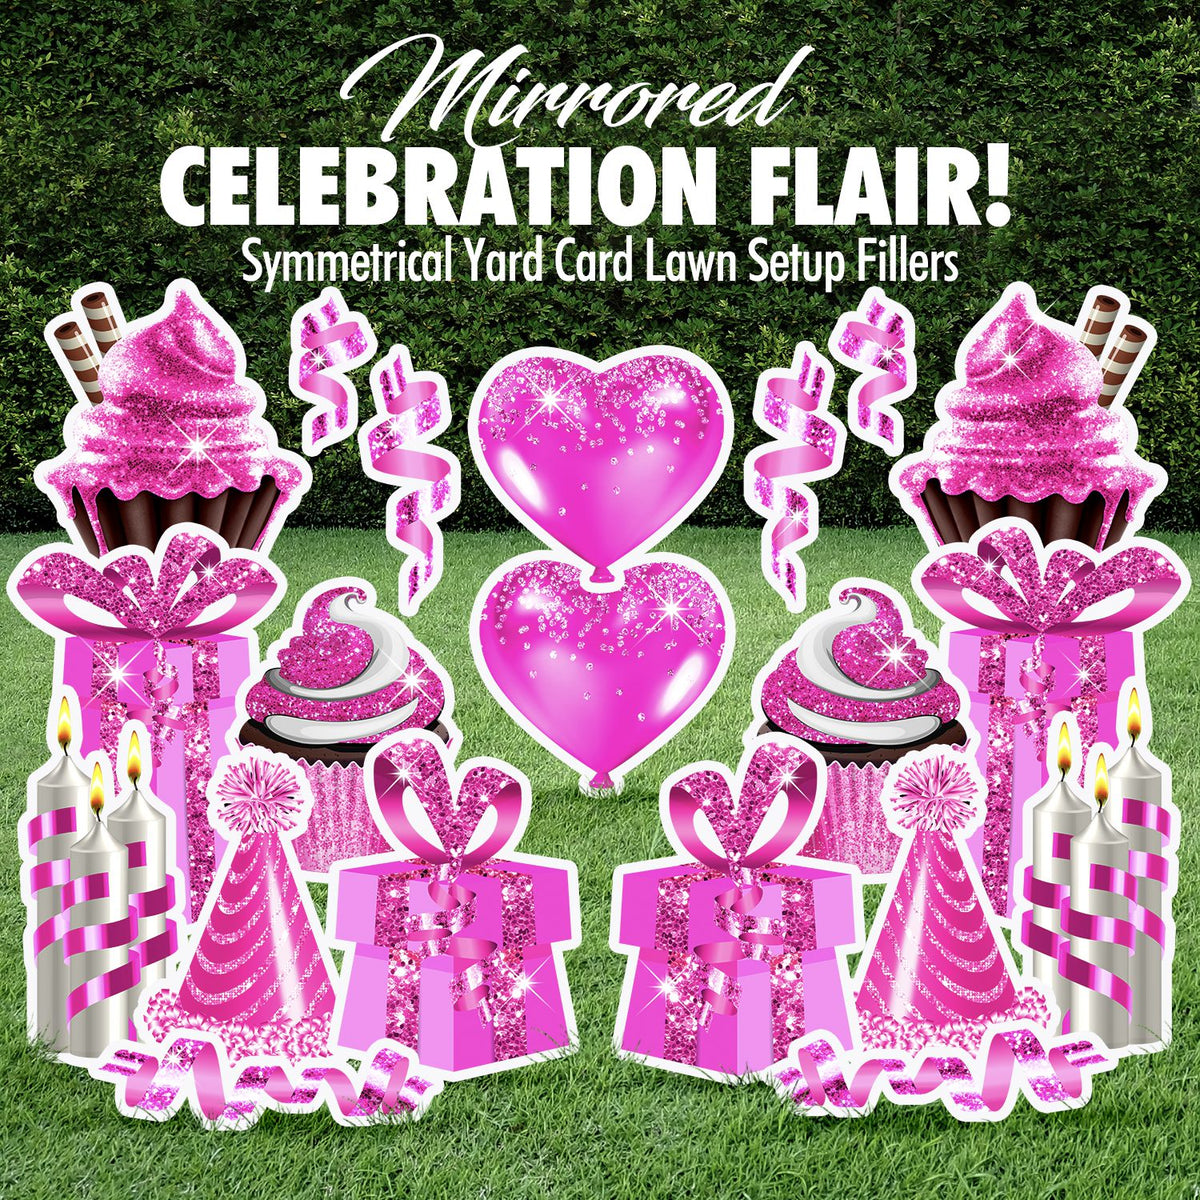 Mirrored Celebration Flair Set - Hot Pink Glitter